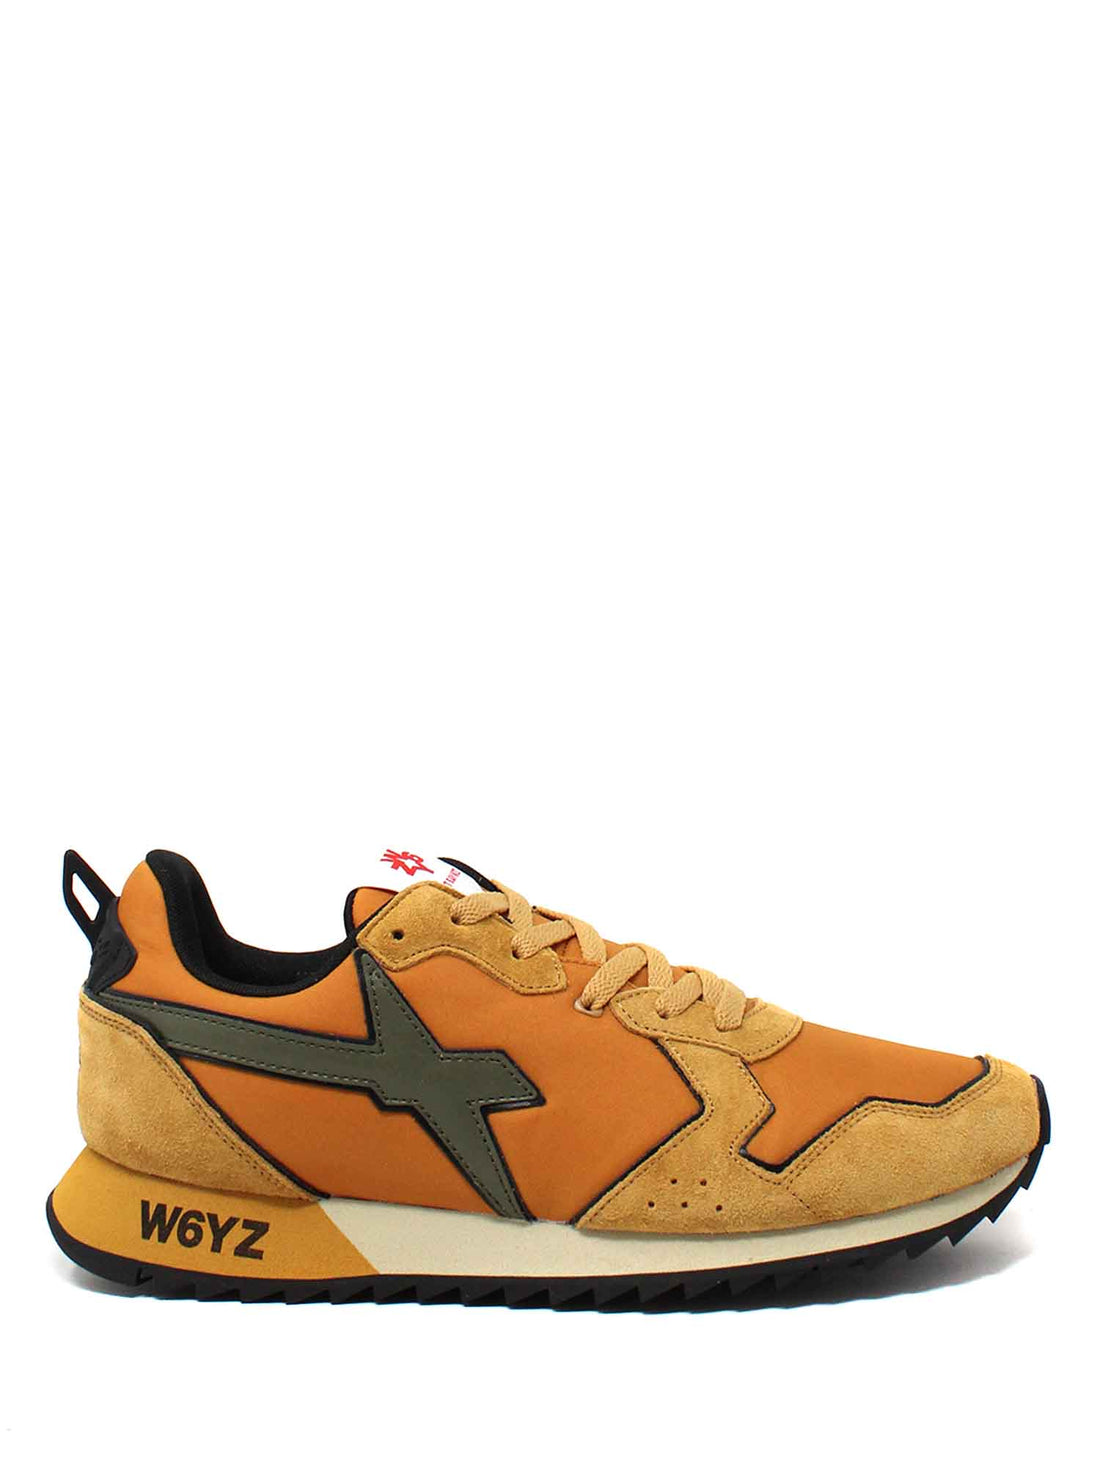 Sneakers Arancio 1g03 W6yz